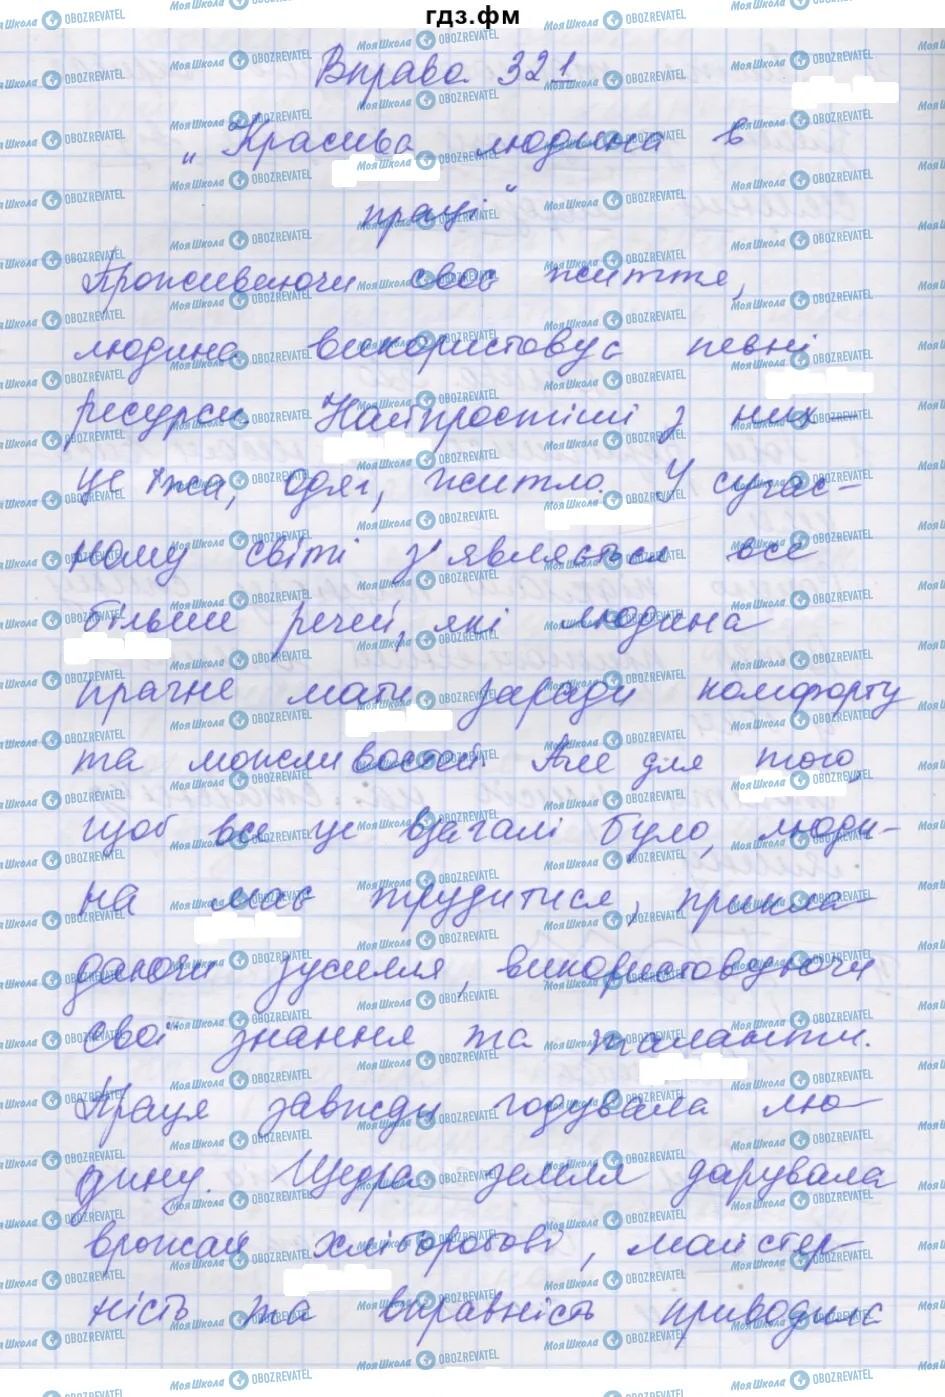 ГДЗ Укр мова 7 класс страница 321